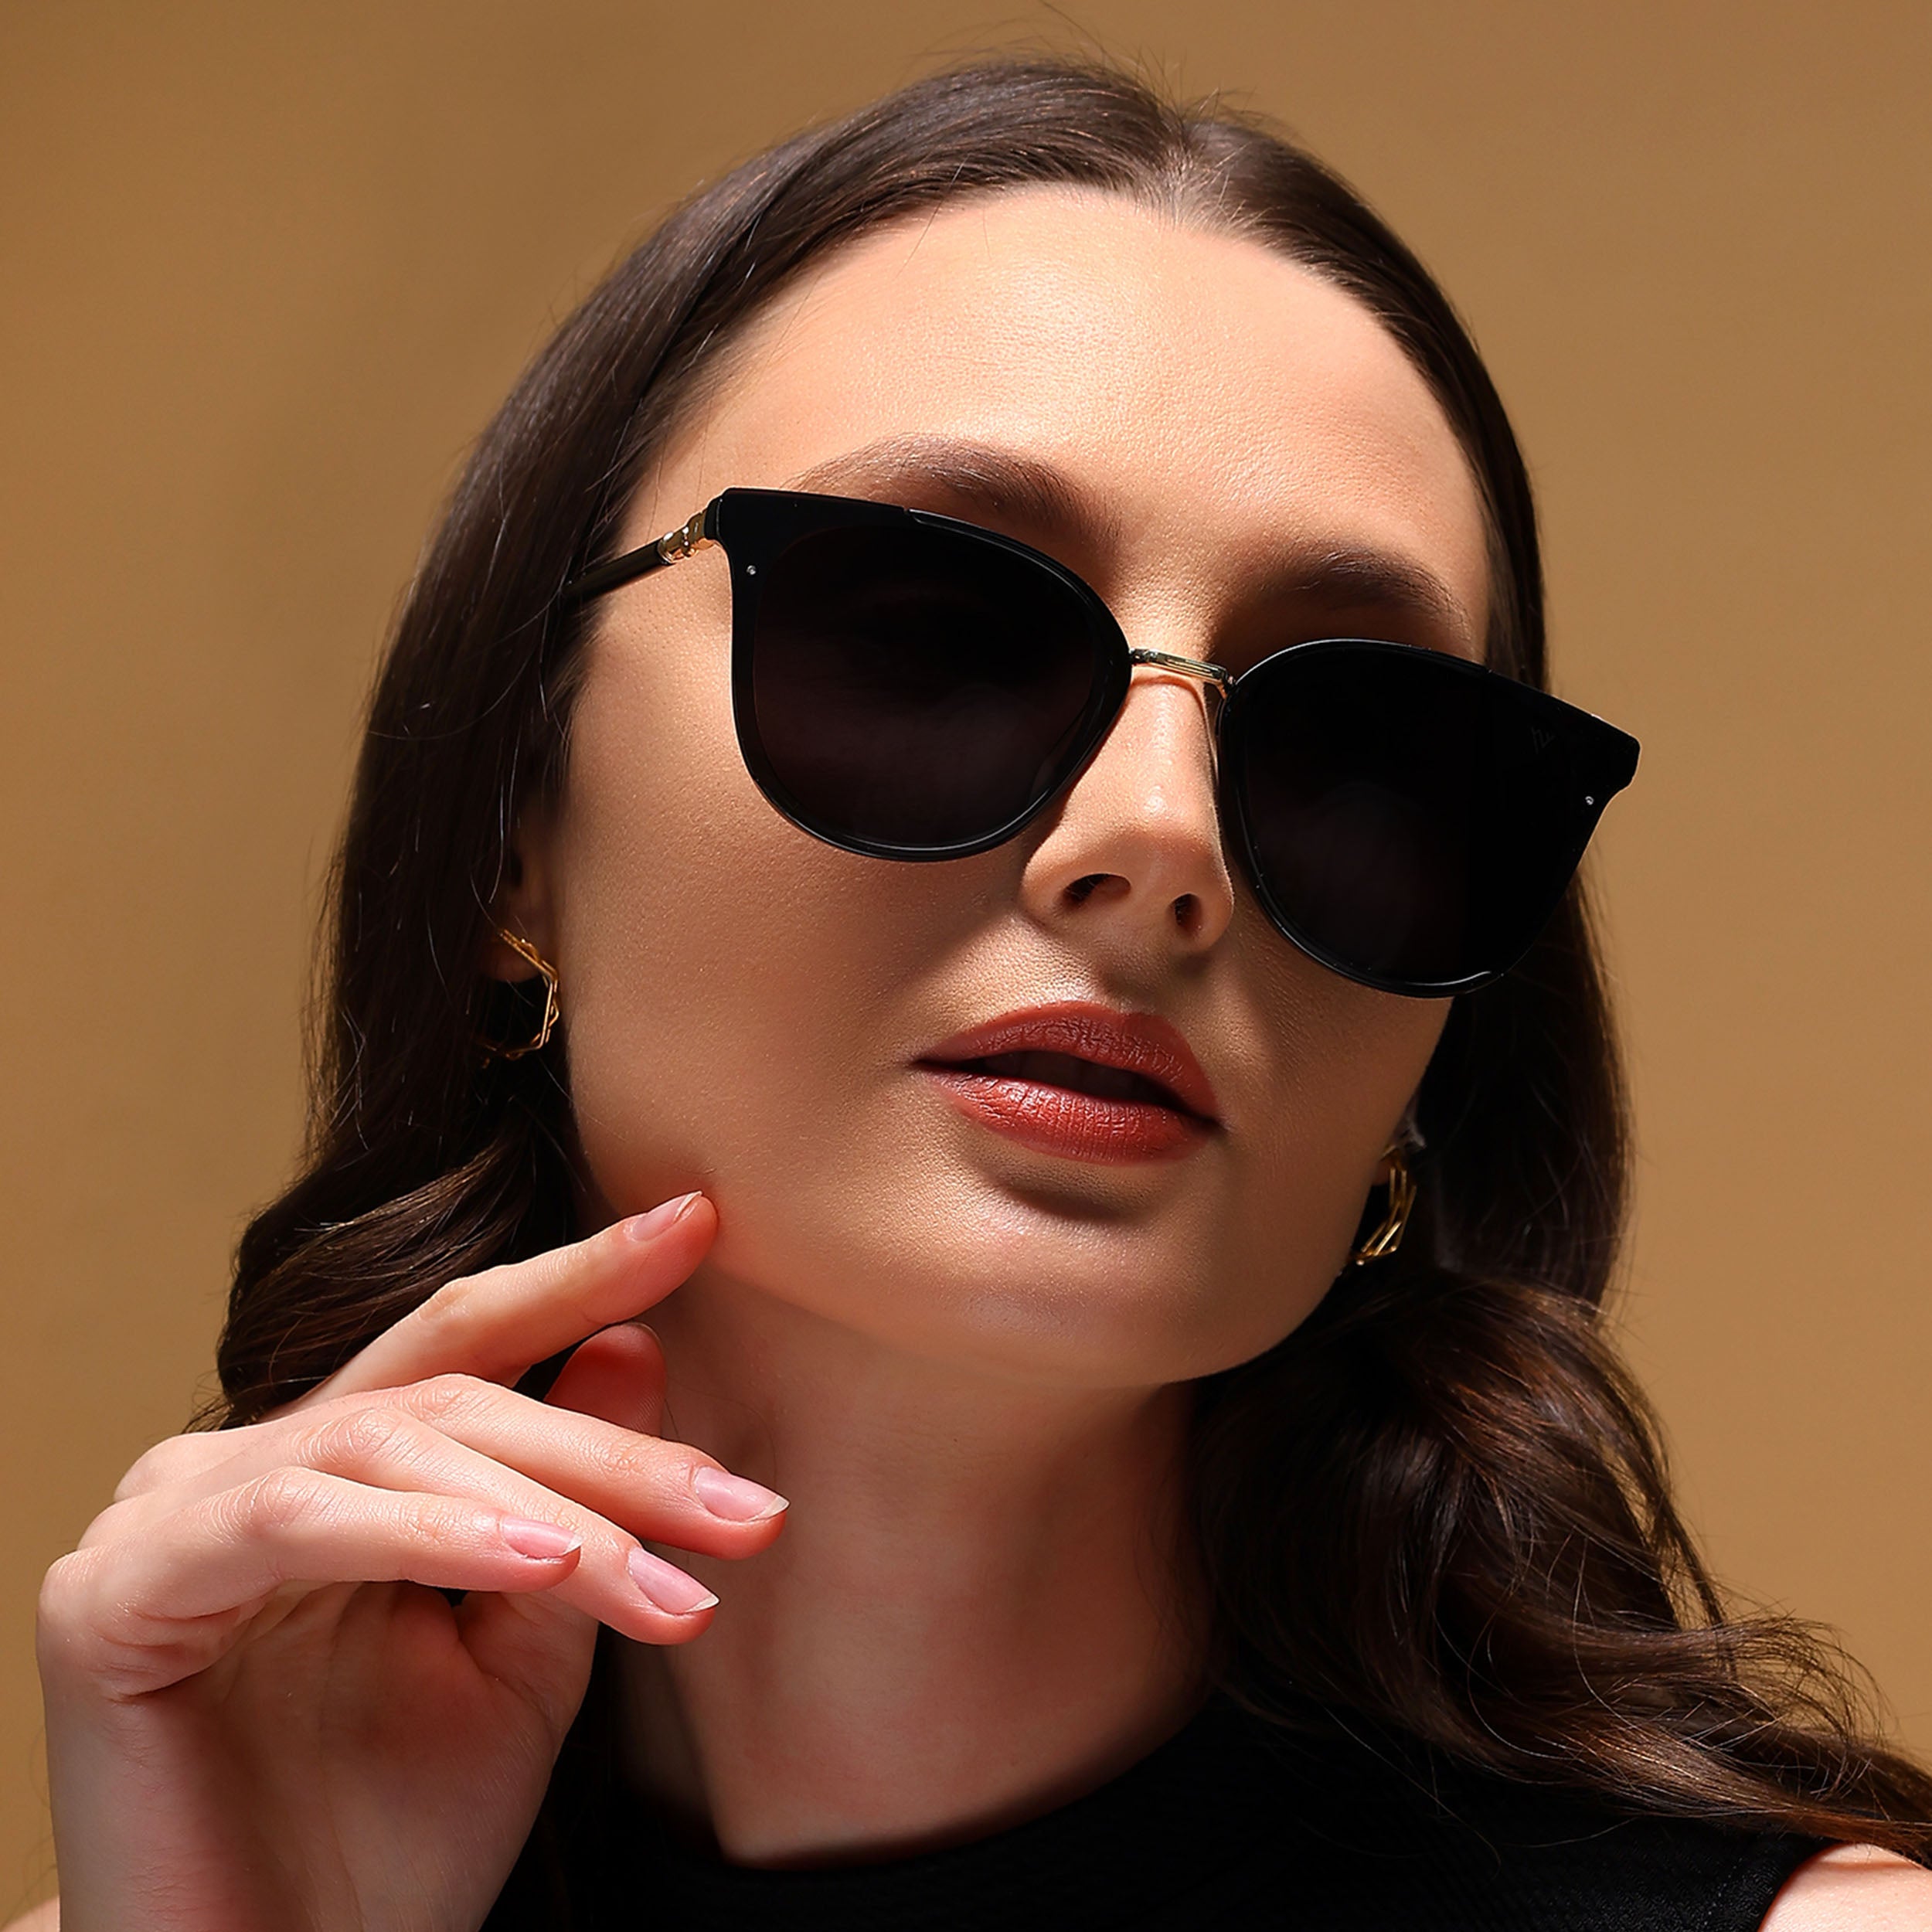 Voyage Cateye Sunglasses for Women (Black Lens | Black Frame - MG3175)